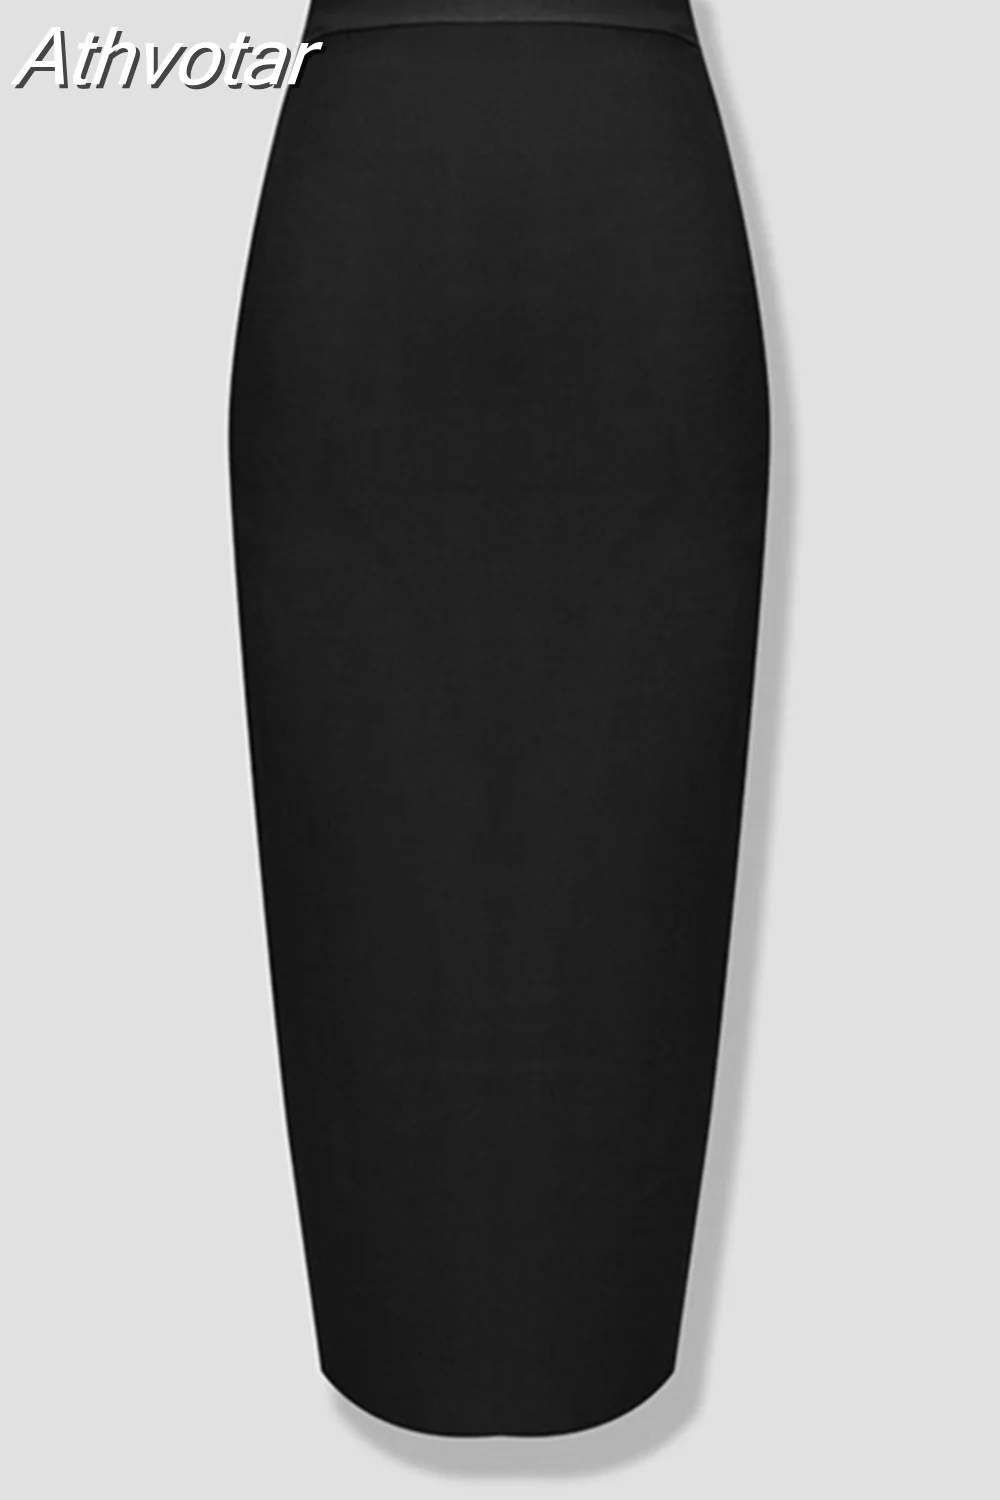 Athvotar Fashion 13 Colors XL XXL Sexy Knee Length Bandage Skirt Women Elastic Bodycon Summer Pencil Skirts 78cm